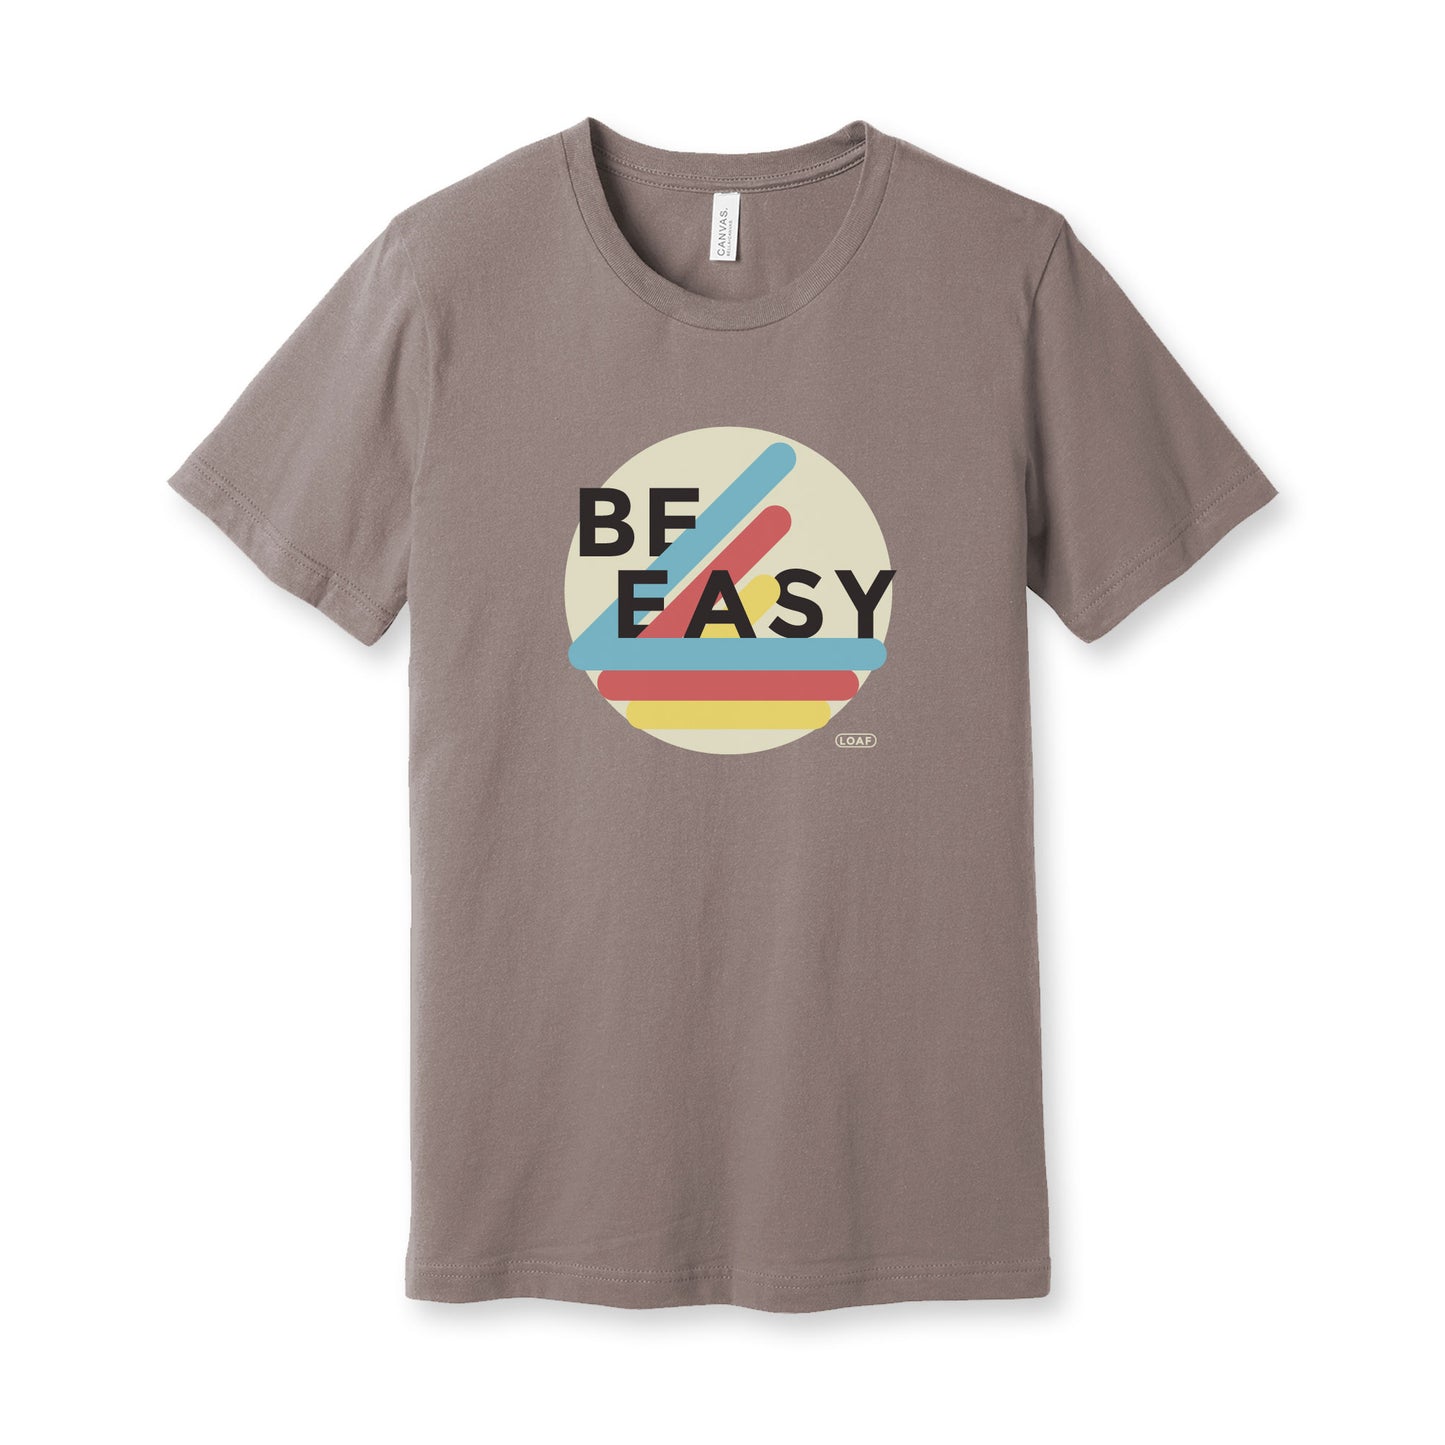 Vintage Be Easy T shirt for men or women Bella Canvas Super soft Pebble shirt